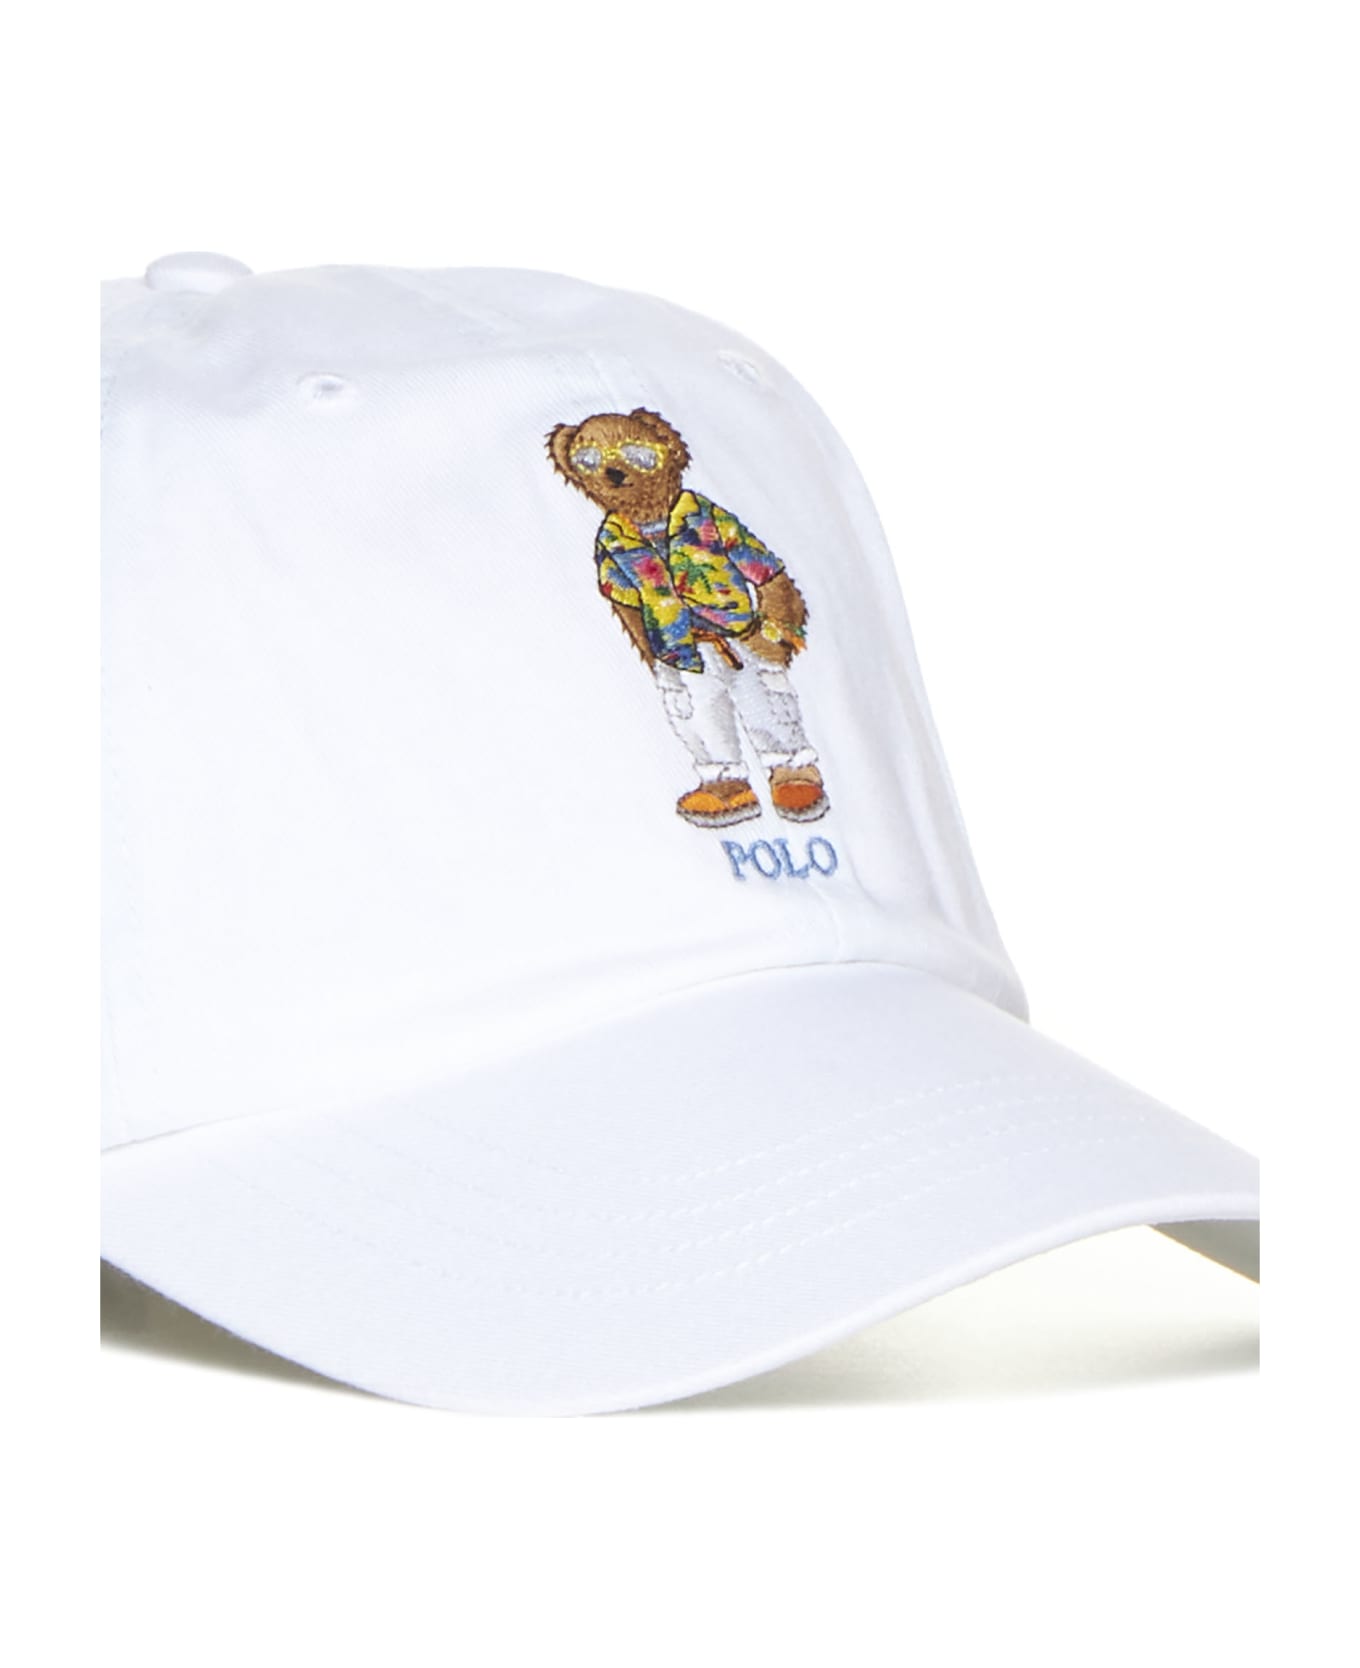 Polo Ralph Lauren Polo Bear Hat - White